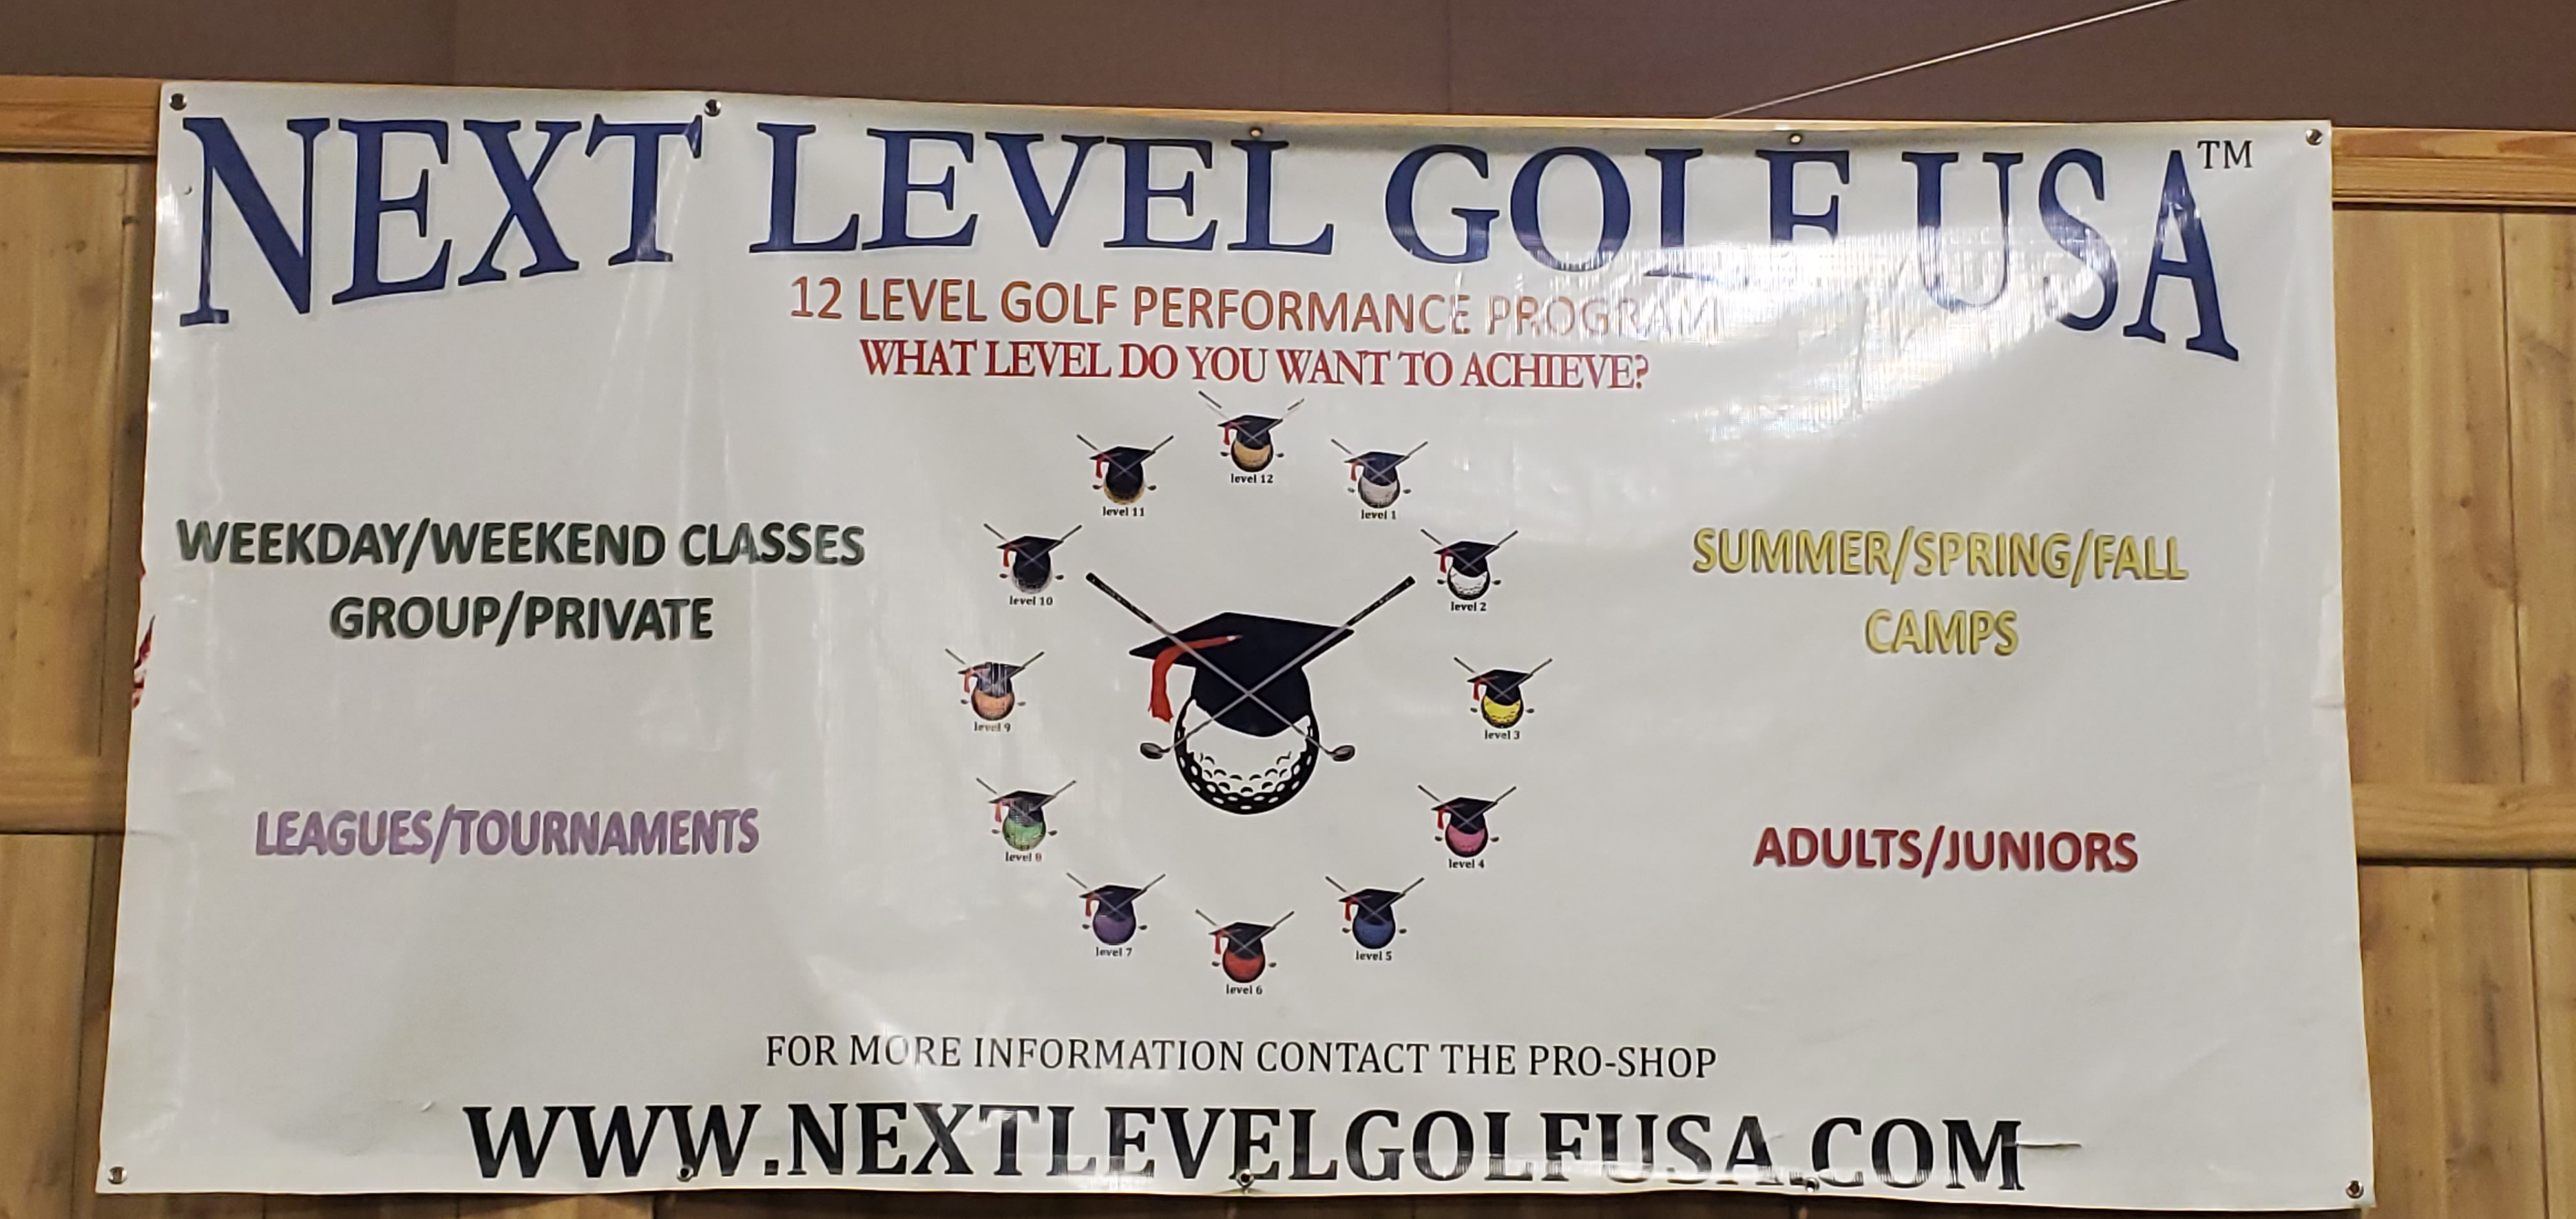 Next Level Golf USA